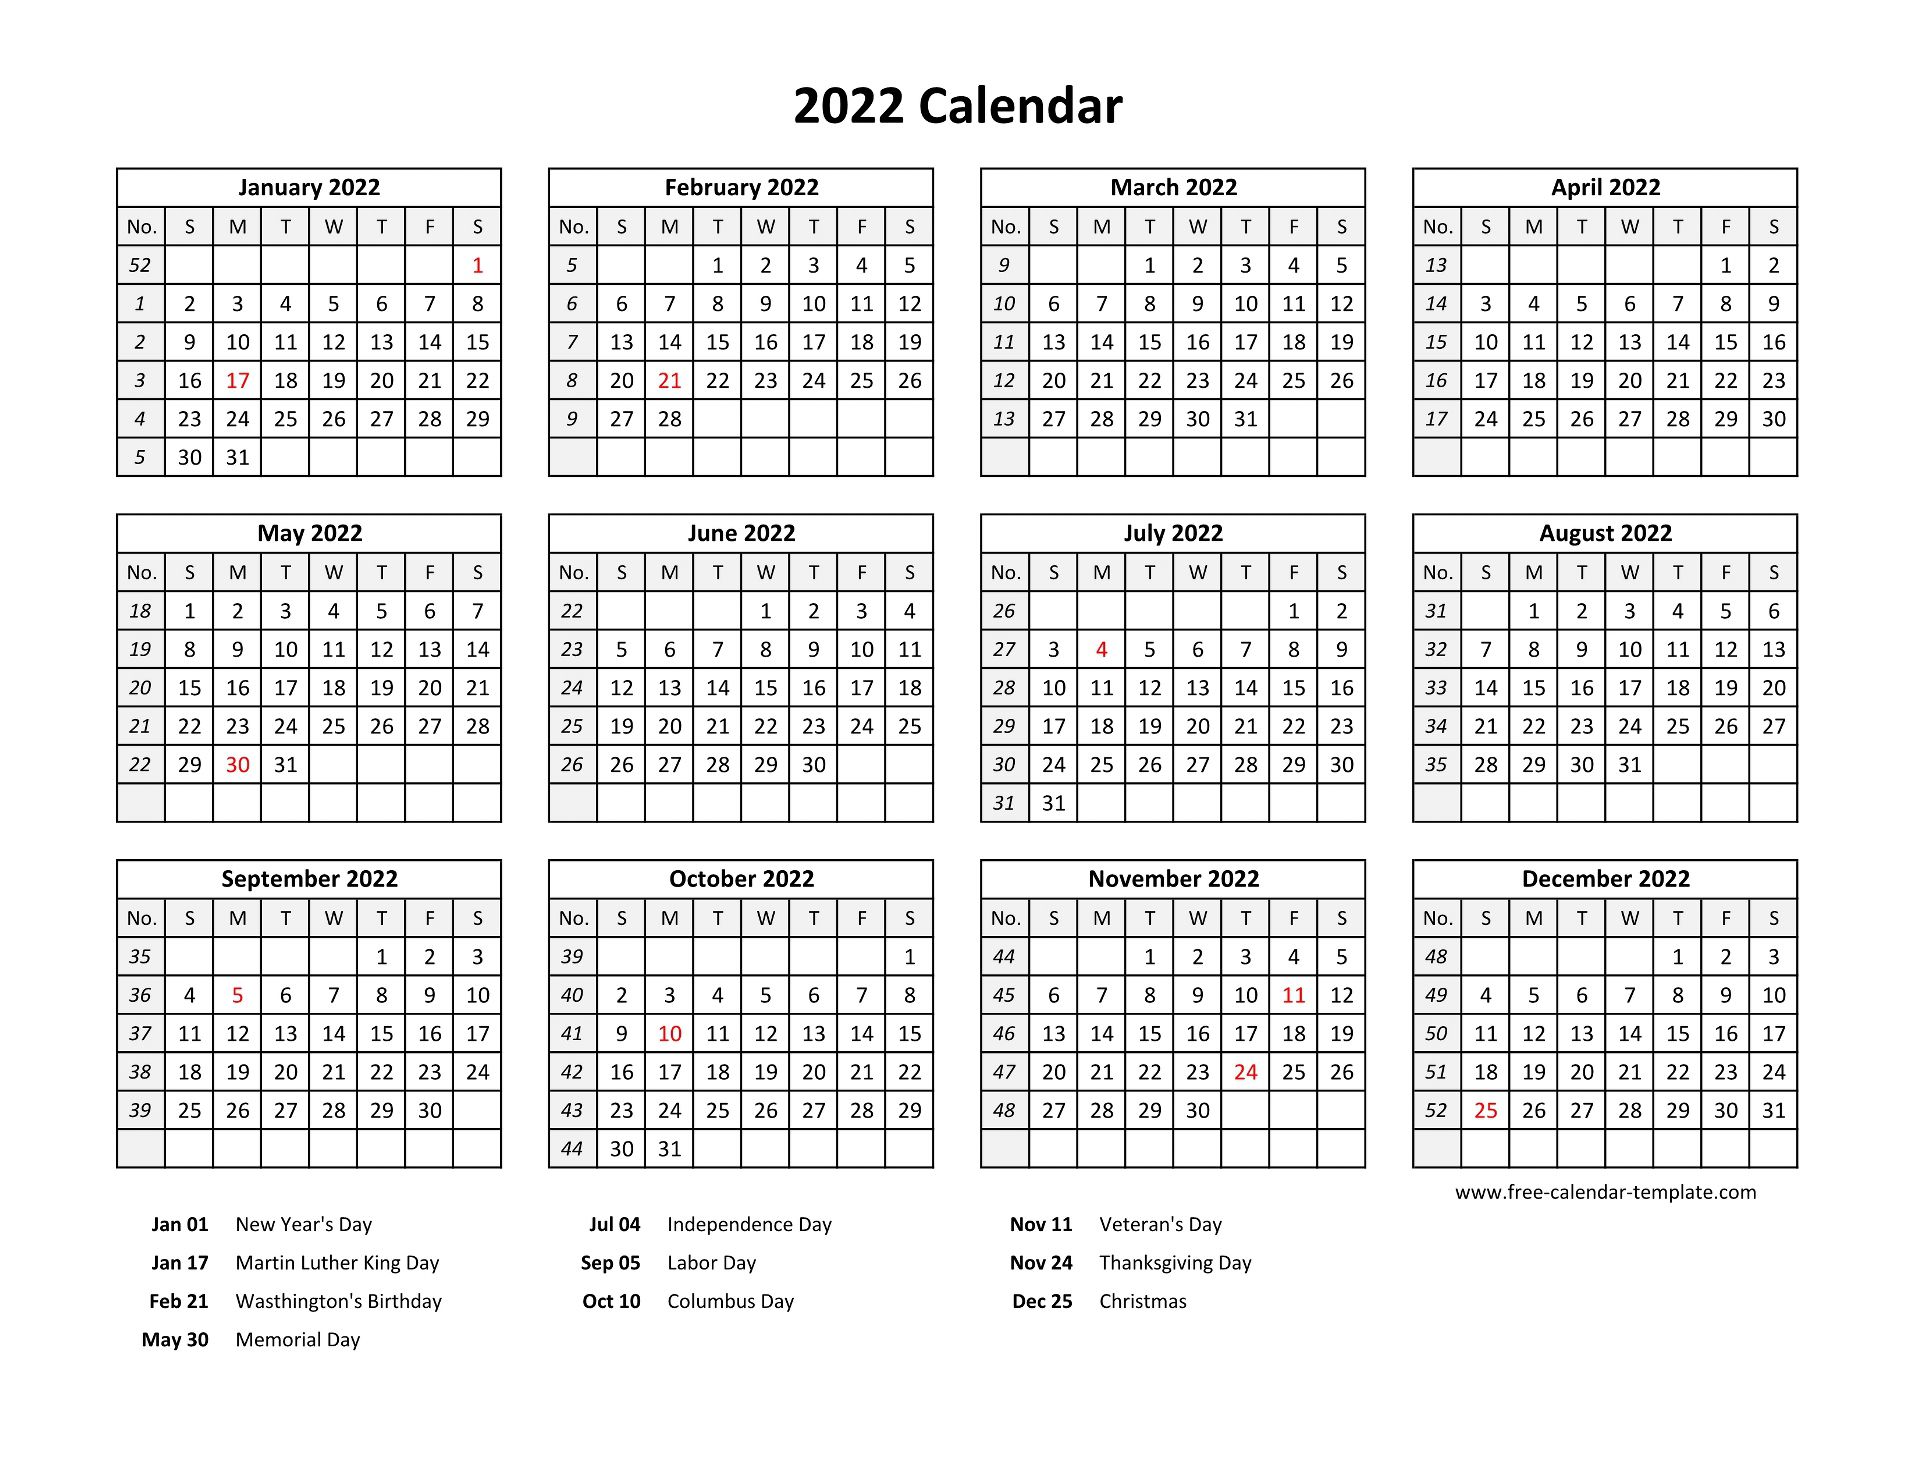 printable-yearly-calendar-2022-with-us-holidays-free-calendar